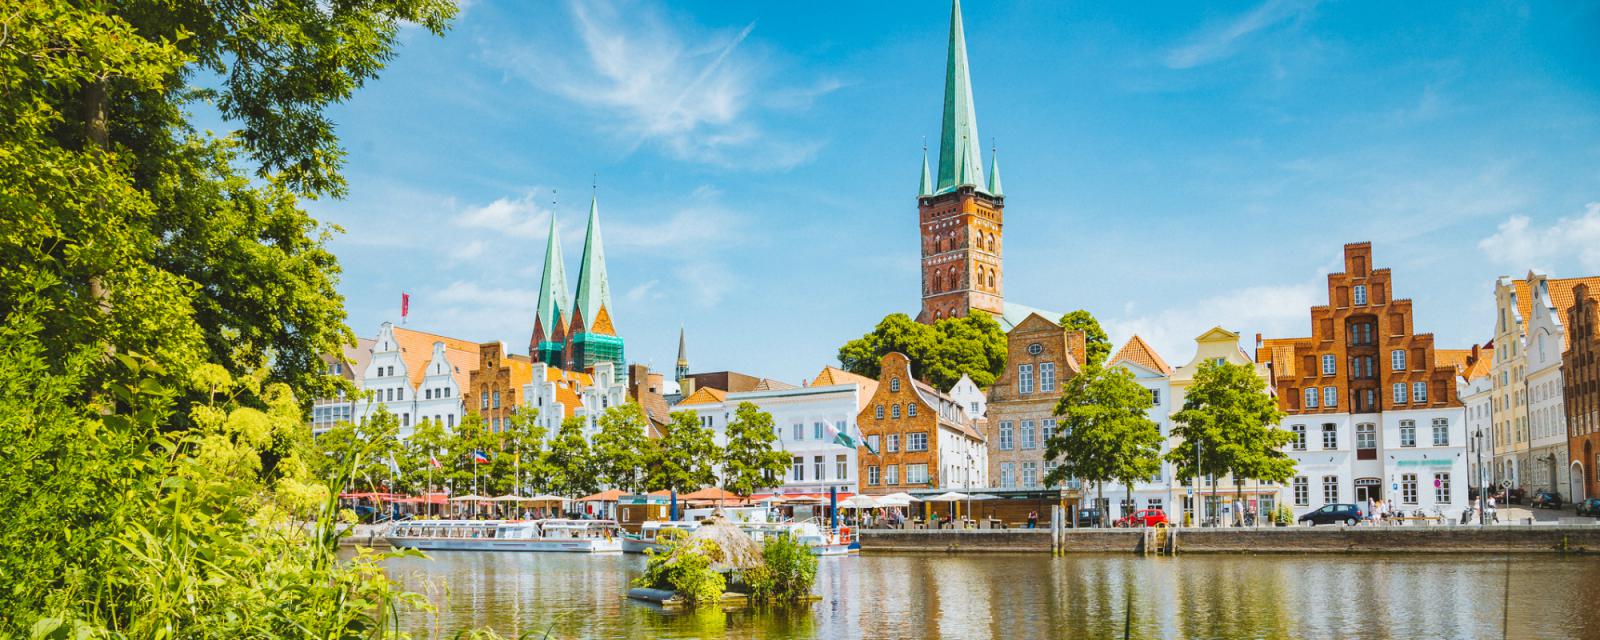 Zomerse stedentrip naar Lübeck? 